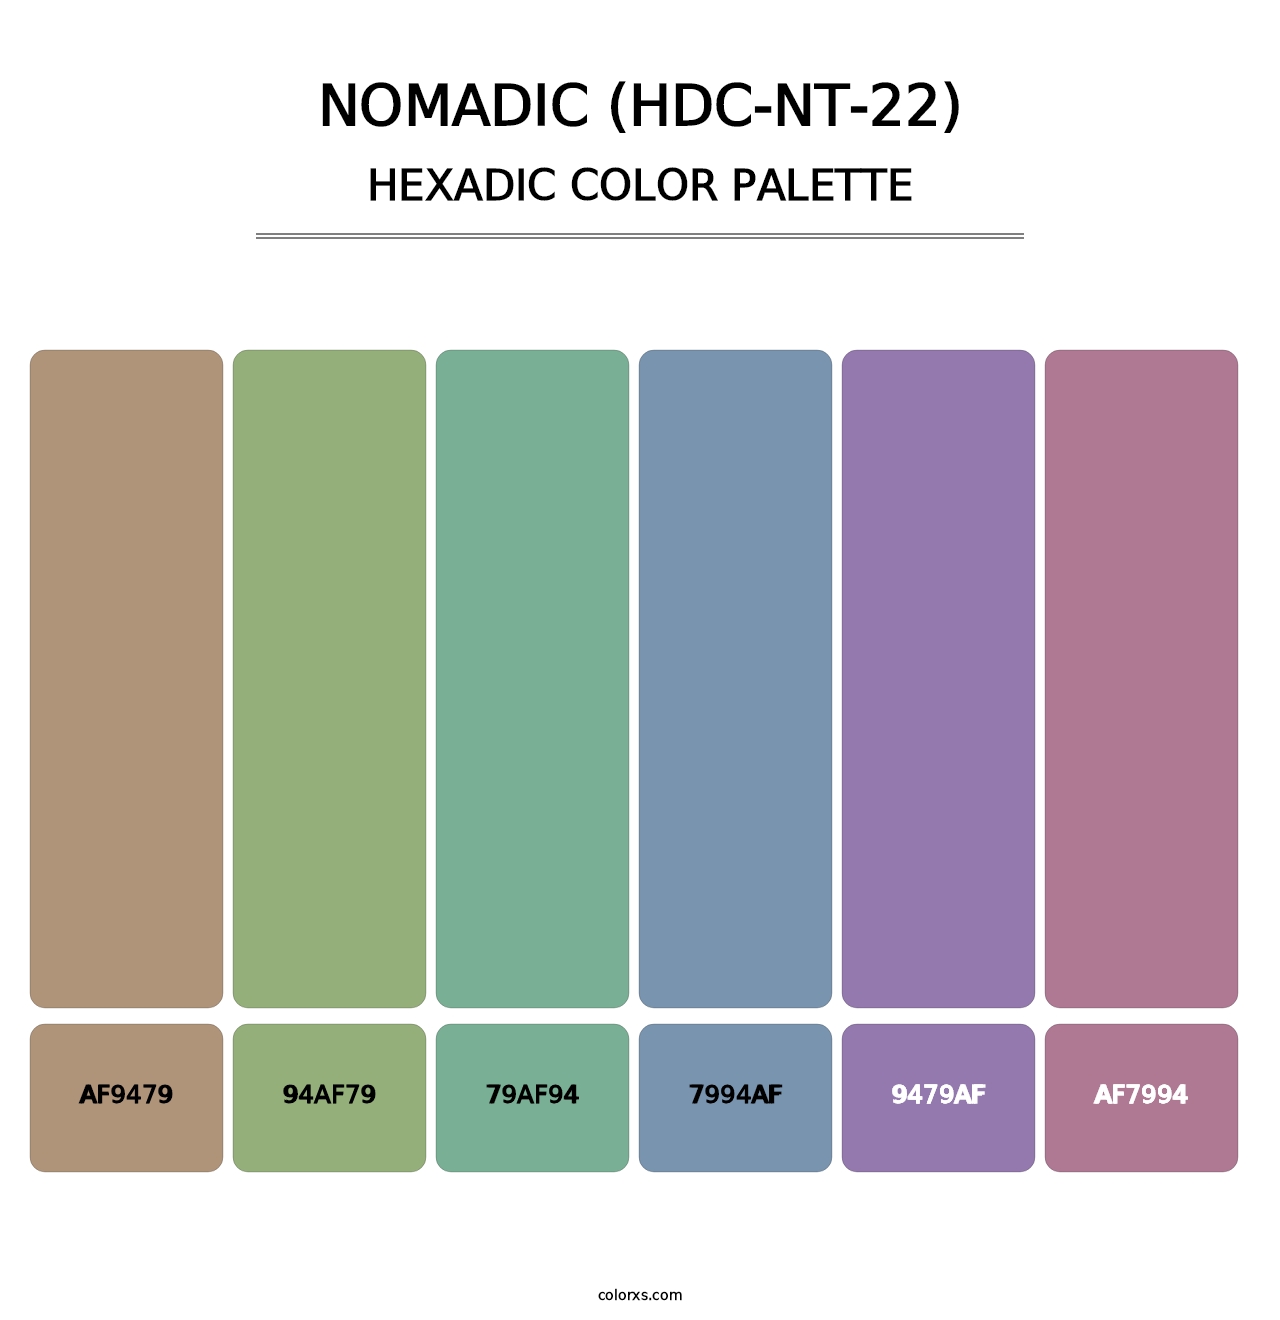 Nomadic (HDC-NT-22) - Hexadic Color Palette